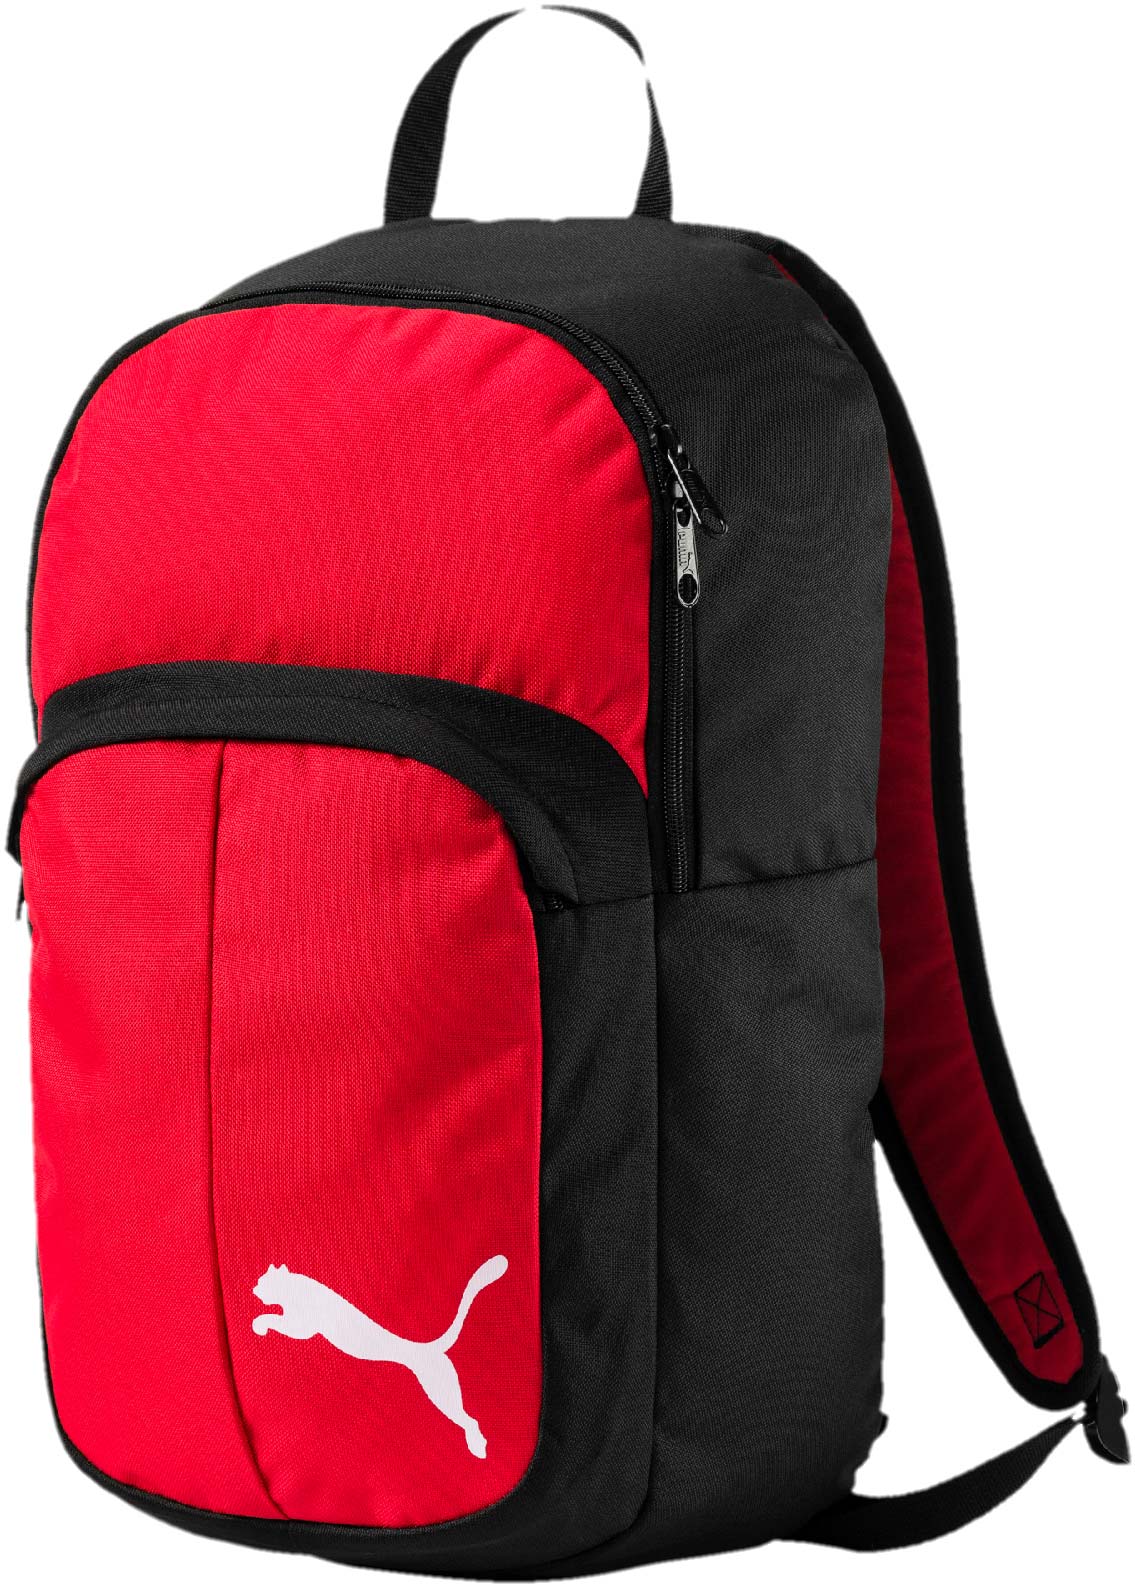 Multi-purpose sports backpack